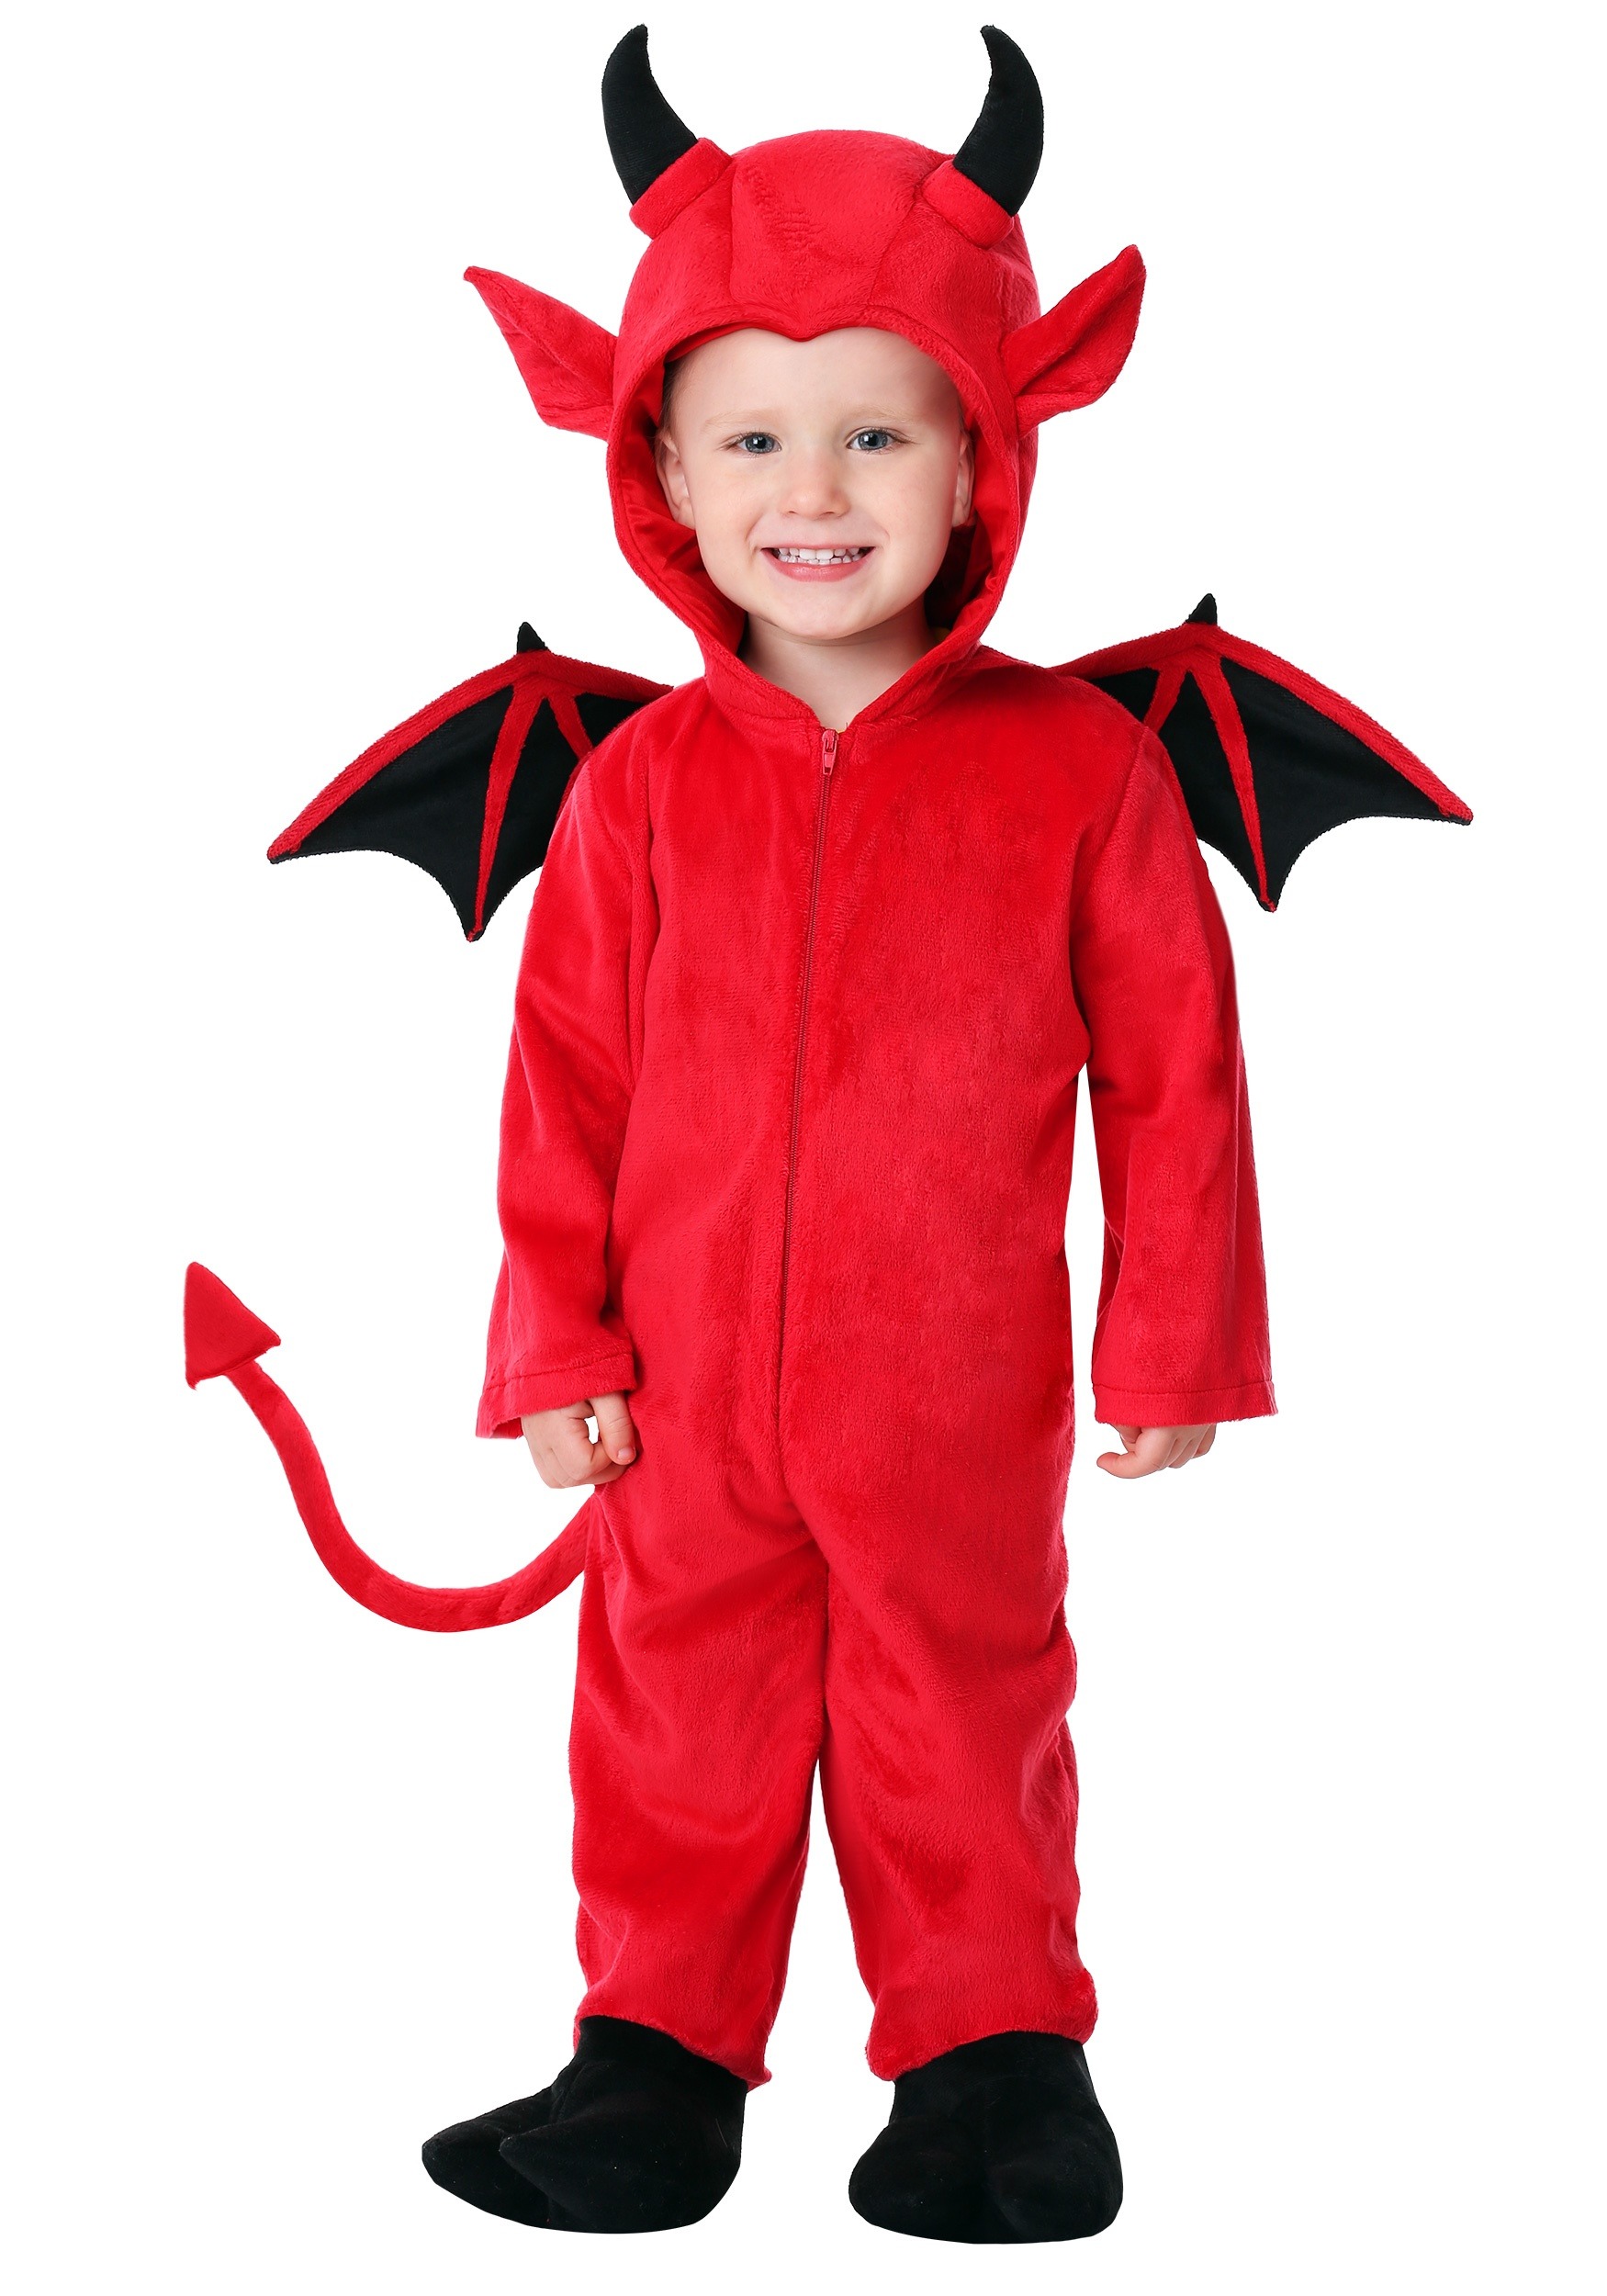 Adorable Devil Costume for Toddlers | Devil Costumes